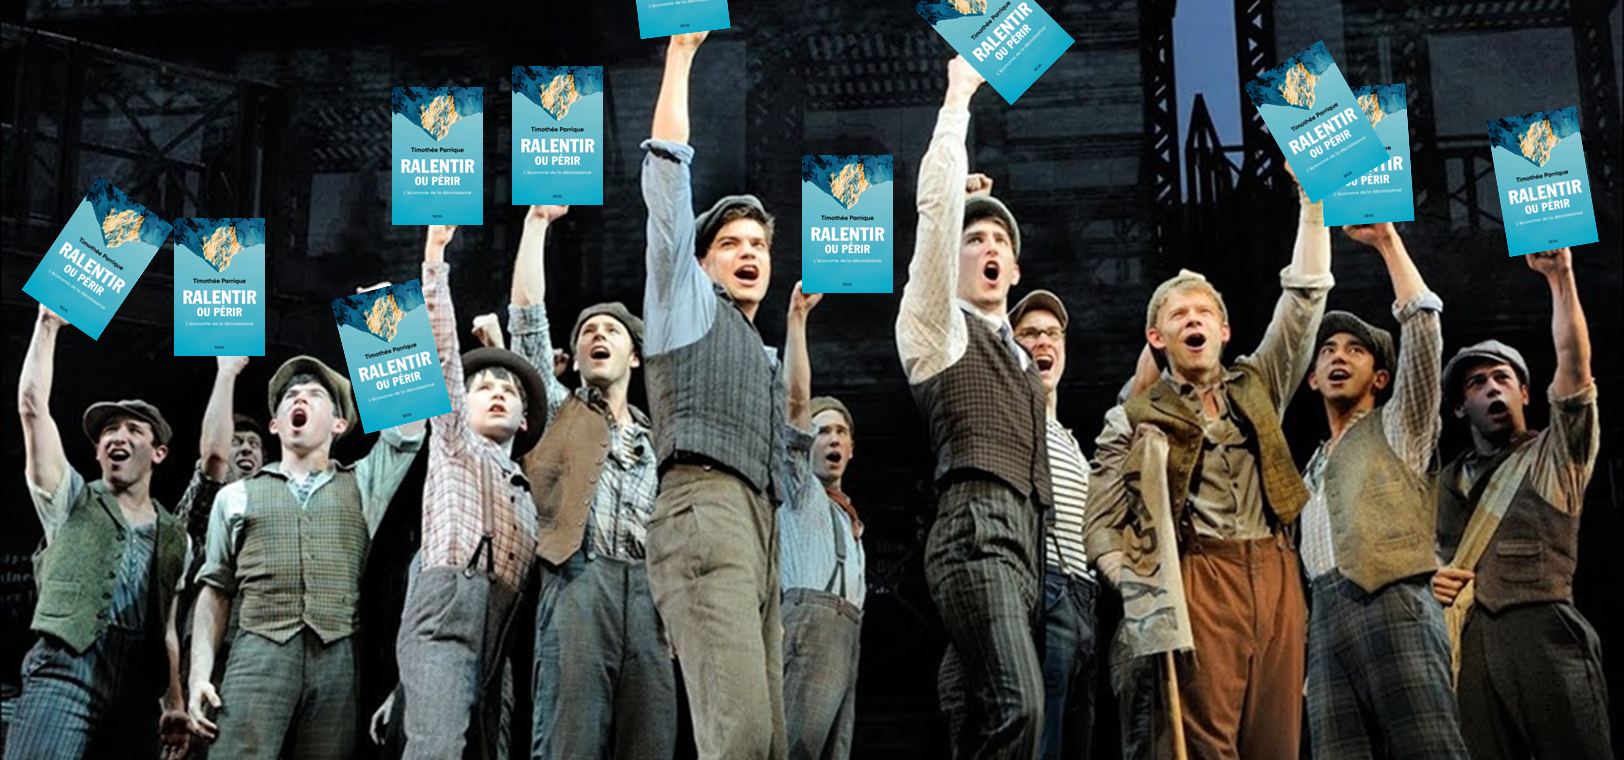 Newsies on Broadway holding the book "Ralentir ou Périr"